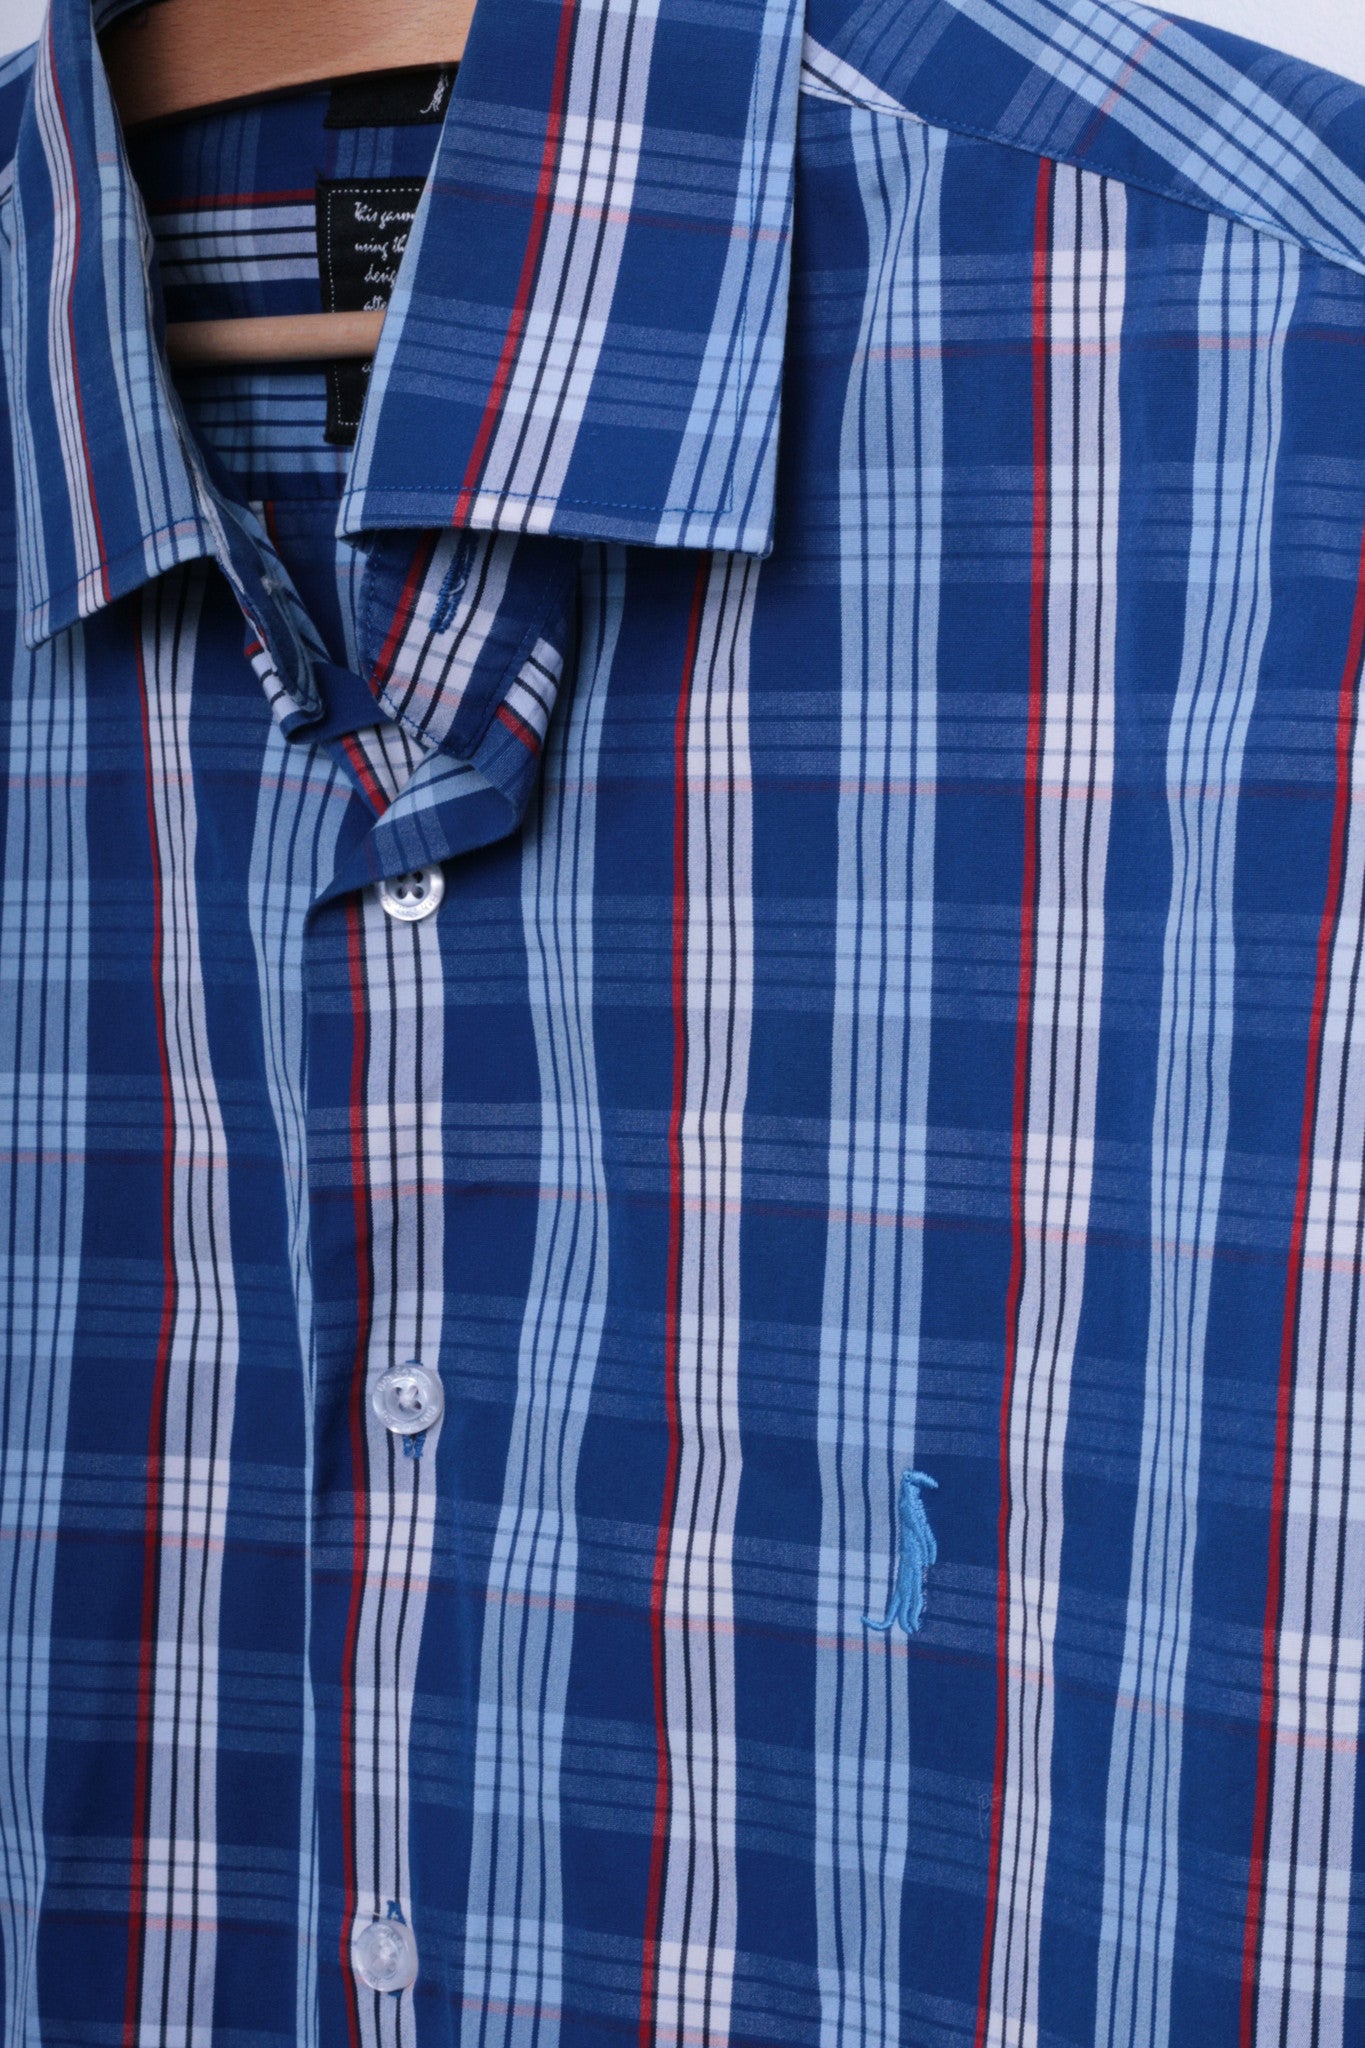 6th Sense Global Designs Womens M Casual Shirt Check Royal Blue Cotton - RetrospectClothes